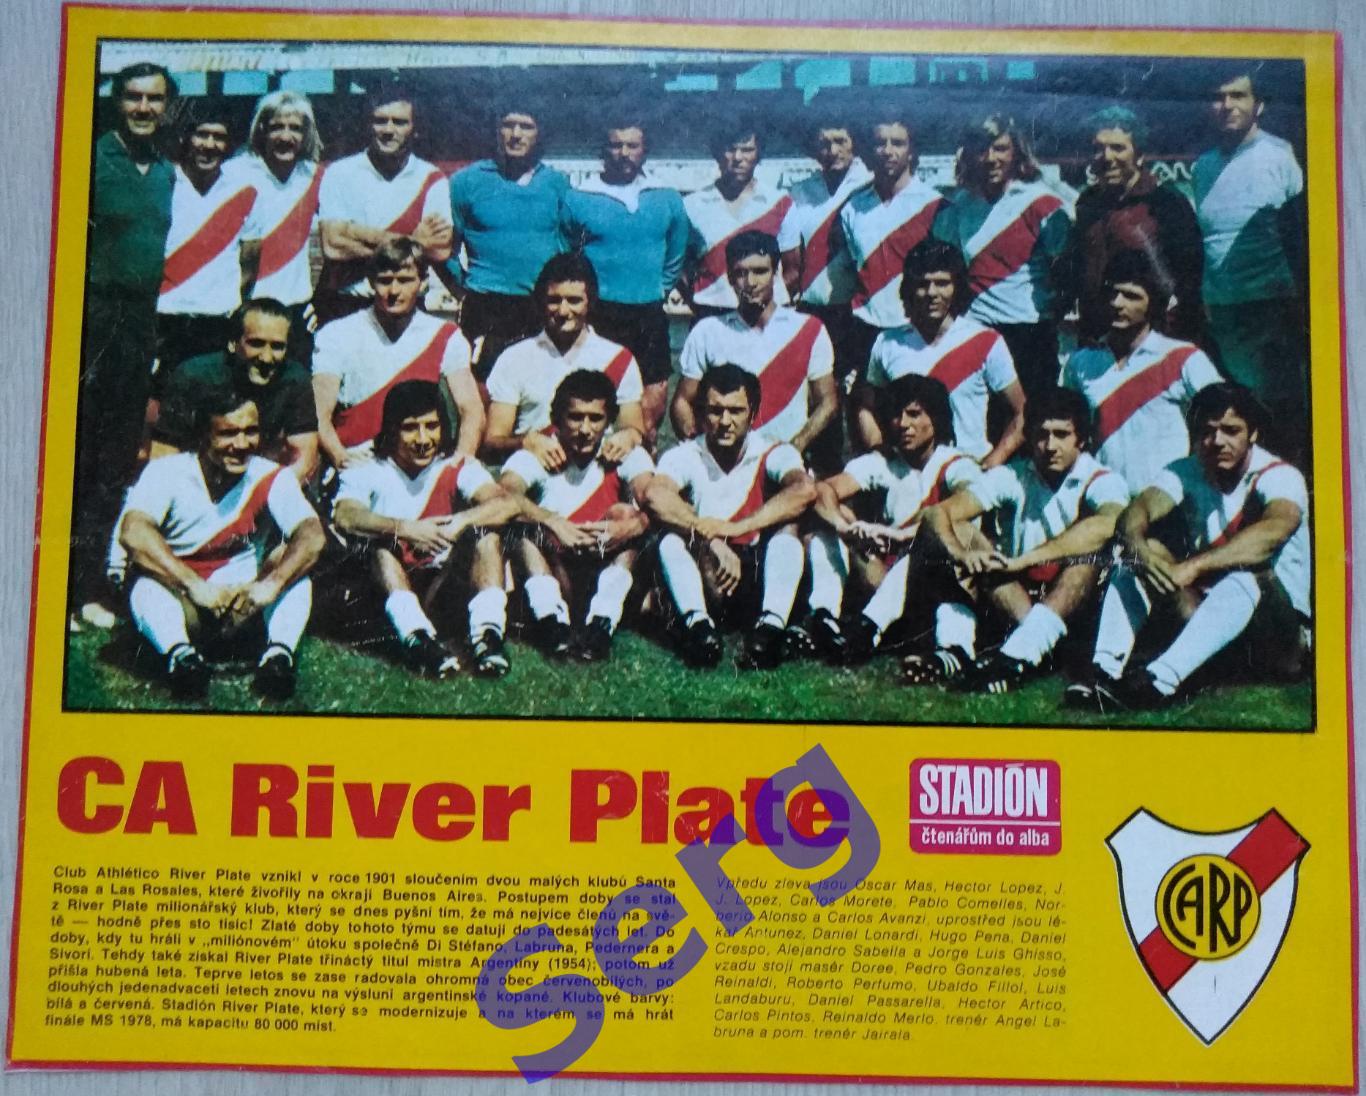 Постер Ривер Плейт Буэнос-Айрес, Аргентина из журнала Стадион/Stadion